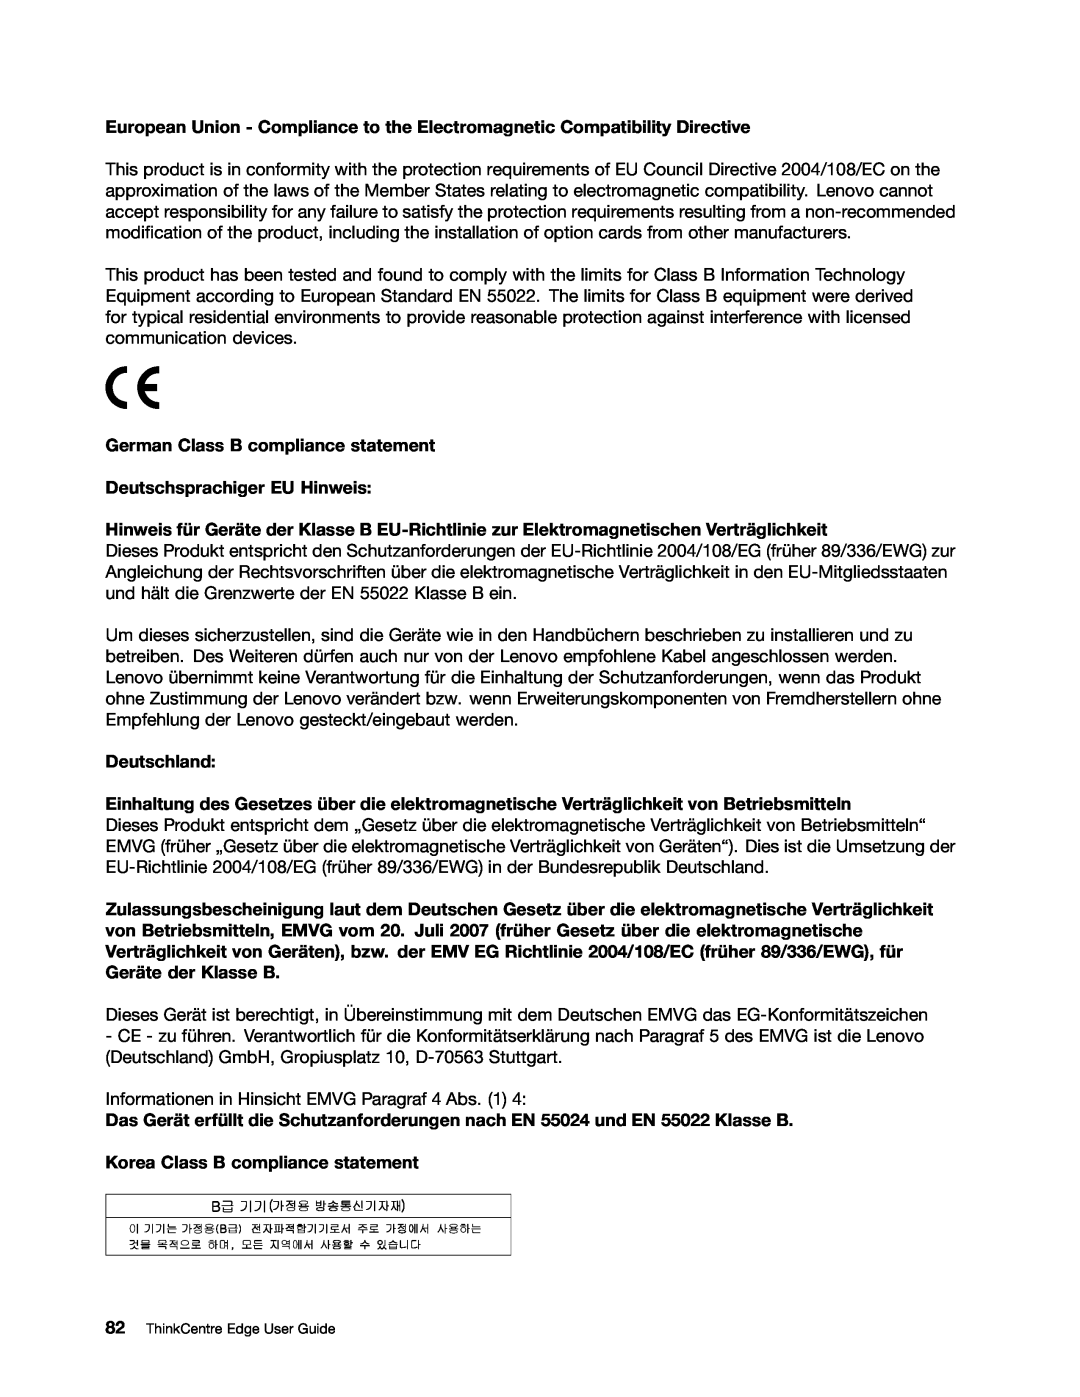 Lenovo 3417, 3398, 3397, 3399, 3414, 3396, 3416 German Class B compliance statement Deutschsprachiger EU Hinweis, Deutschland 